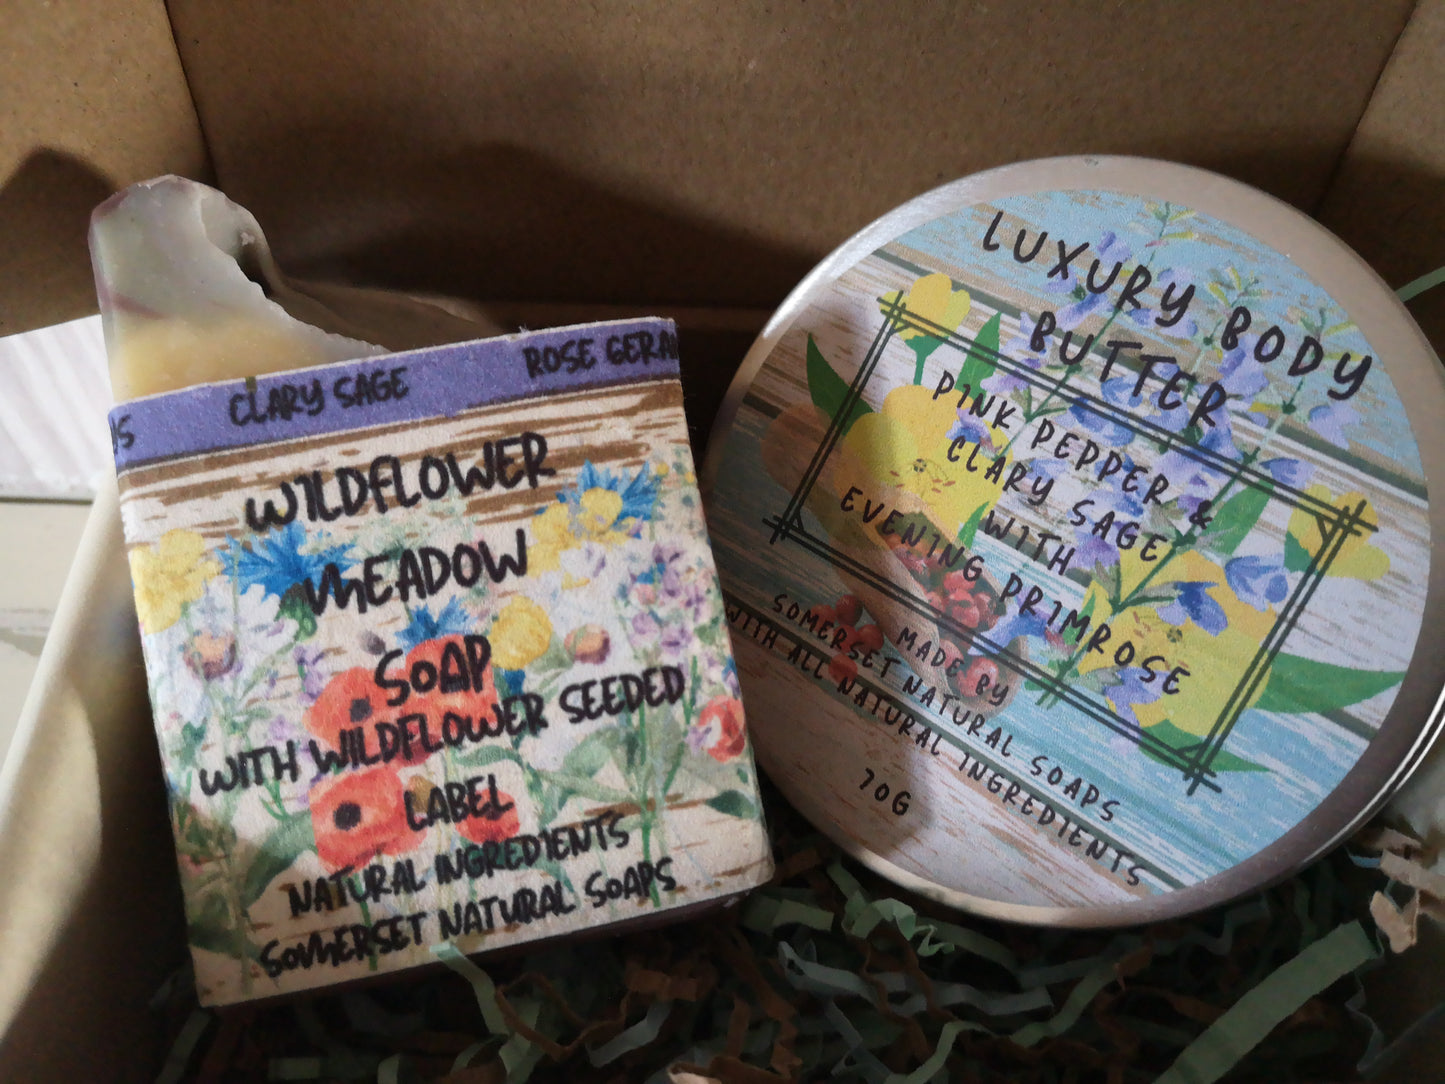 Gift set Luxury Body Butter Clary Sage & Pink Pepper & Wildflower Meadow Vegan Soap